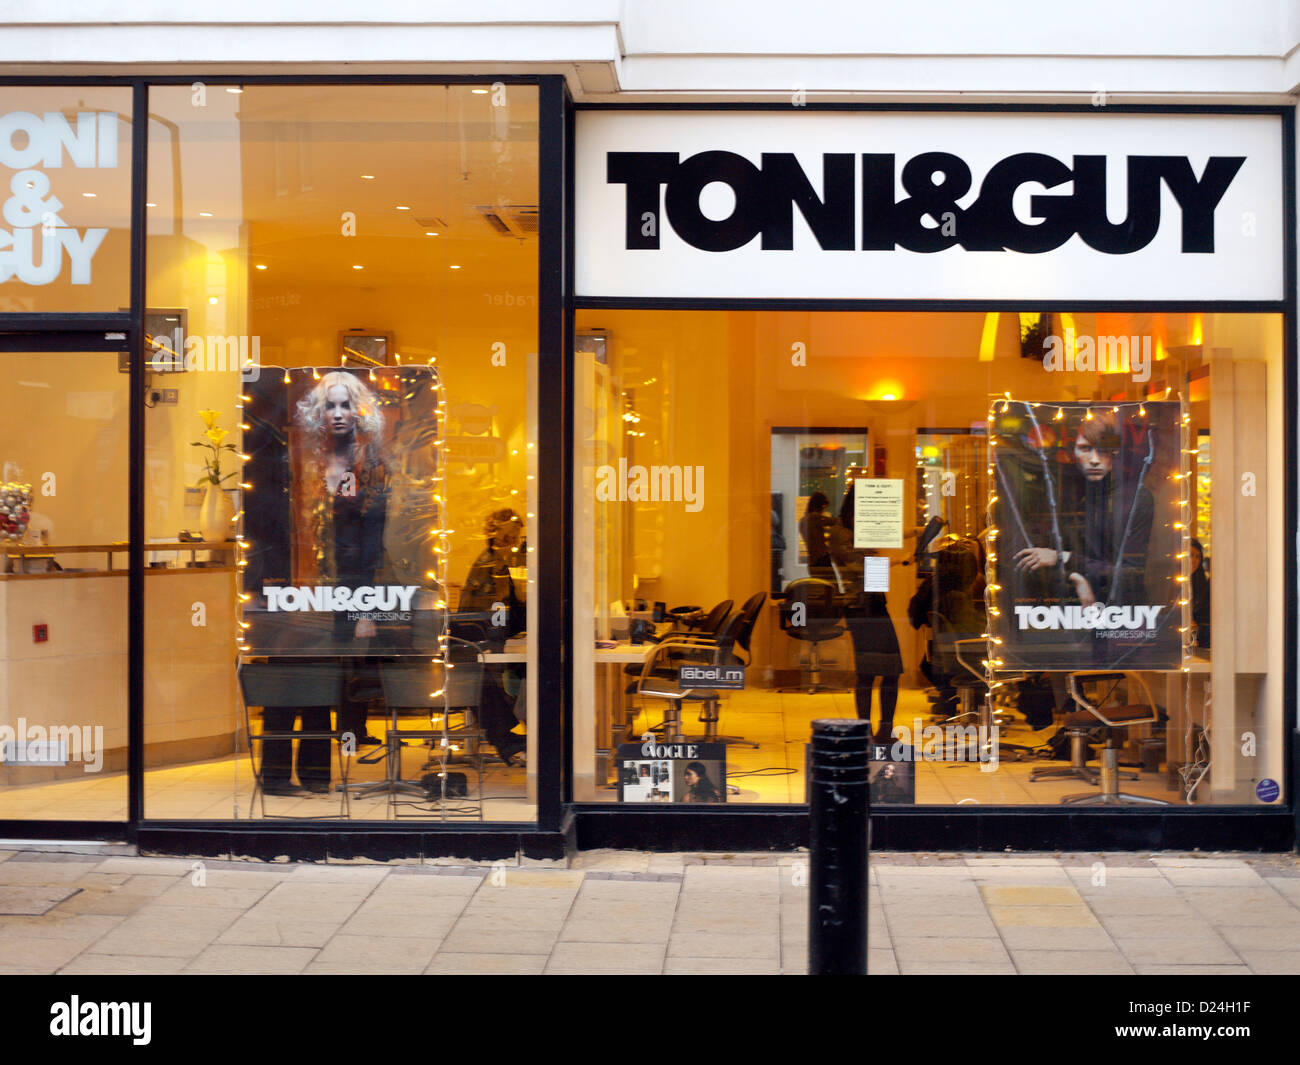 Toni guy salon -Fotos und -Bildmaterial in hoher Auflösung – Alamy